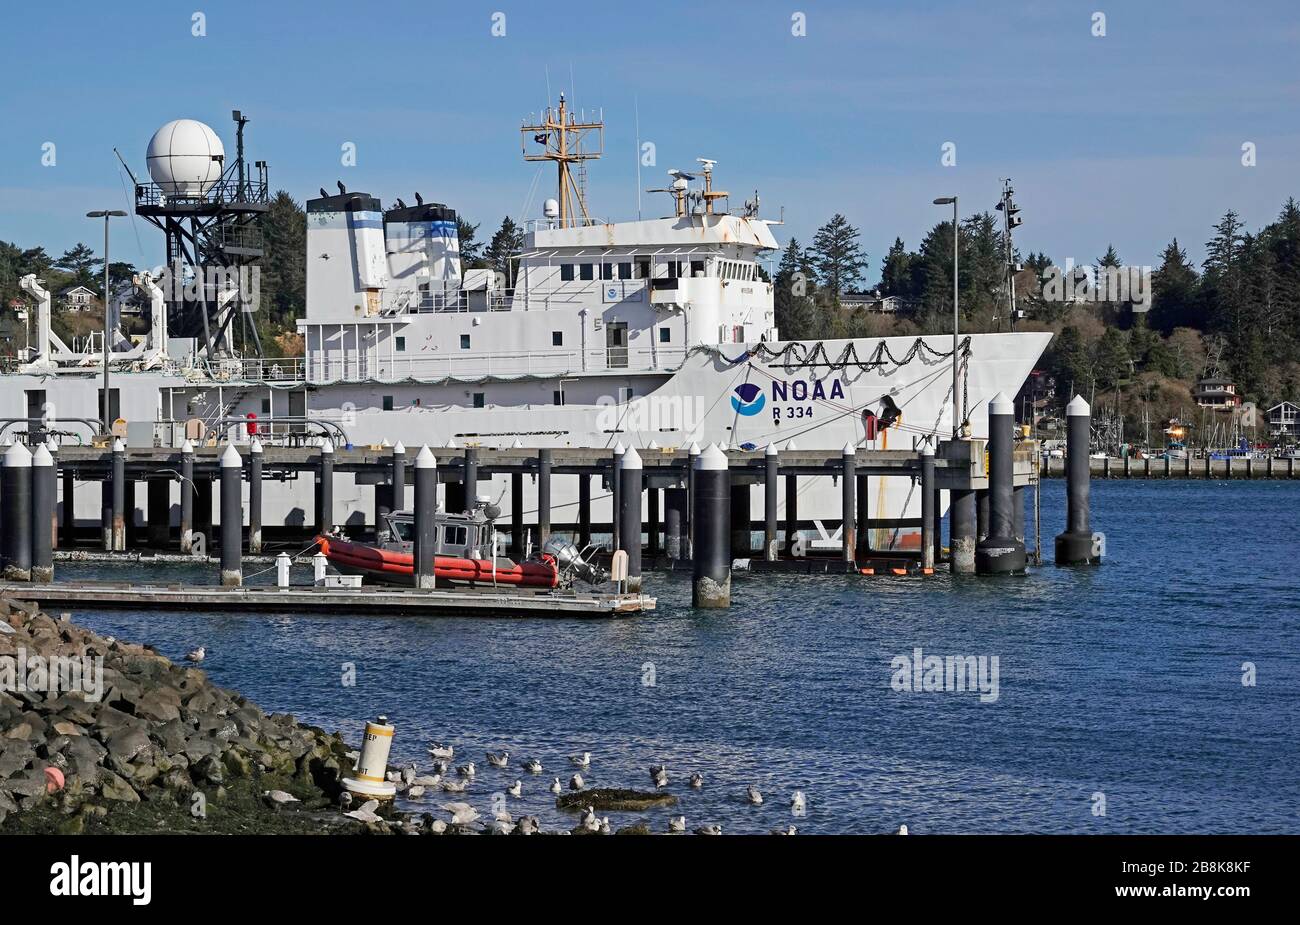 Das NOAA-Schiff (National Oceanic and Atmospheric Administration) Hi'ialakai (R 334), Teil der Pazifikflotte, die in Newport, Oregon stationiert ist. Stockfoto